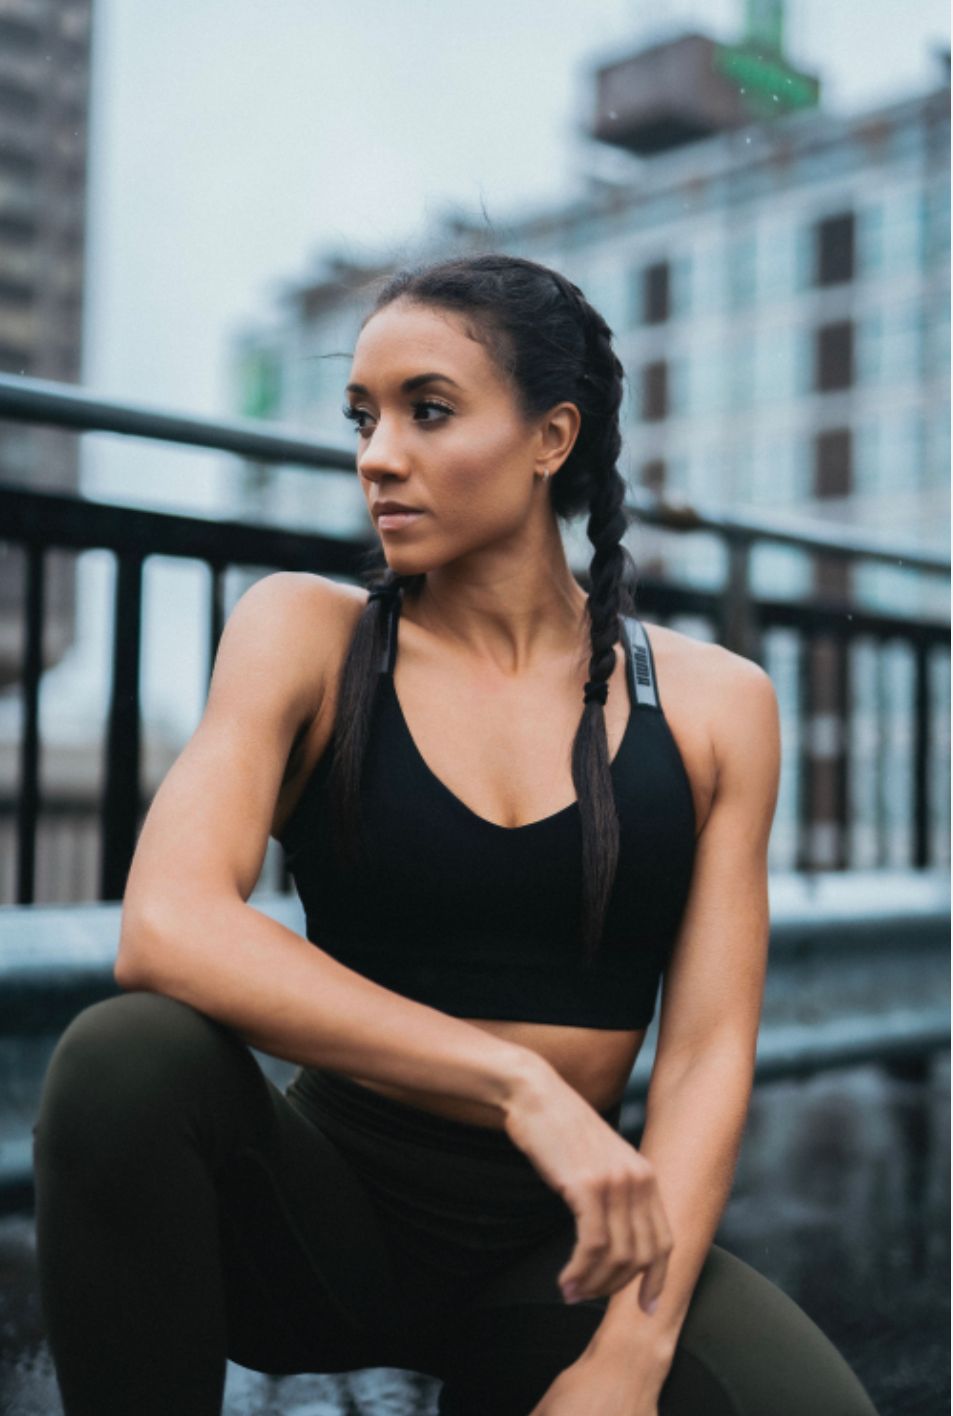 Fitness Specialist - Nicole Danielle